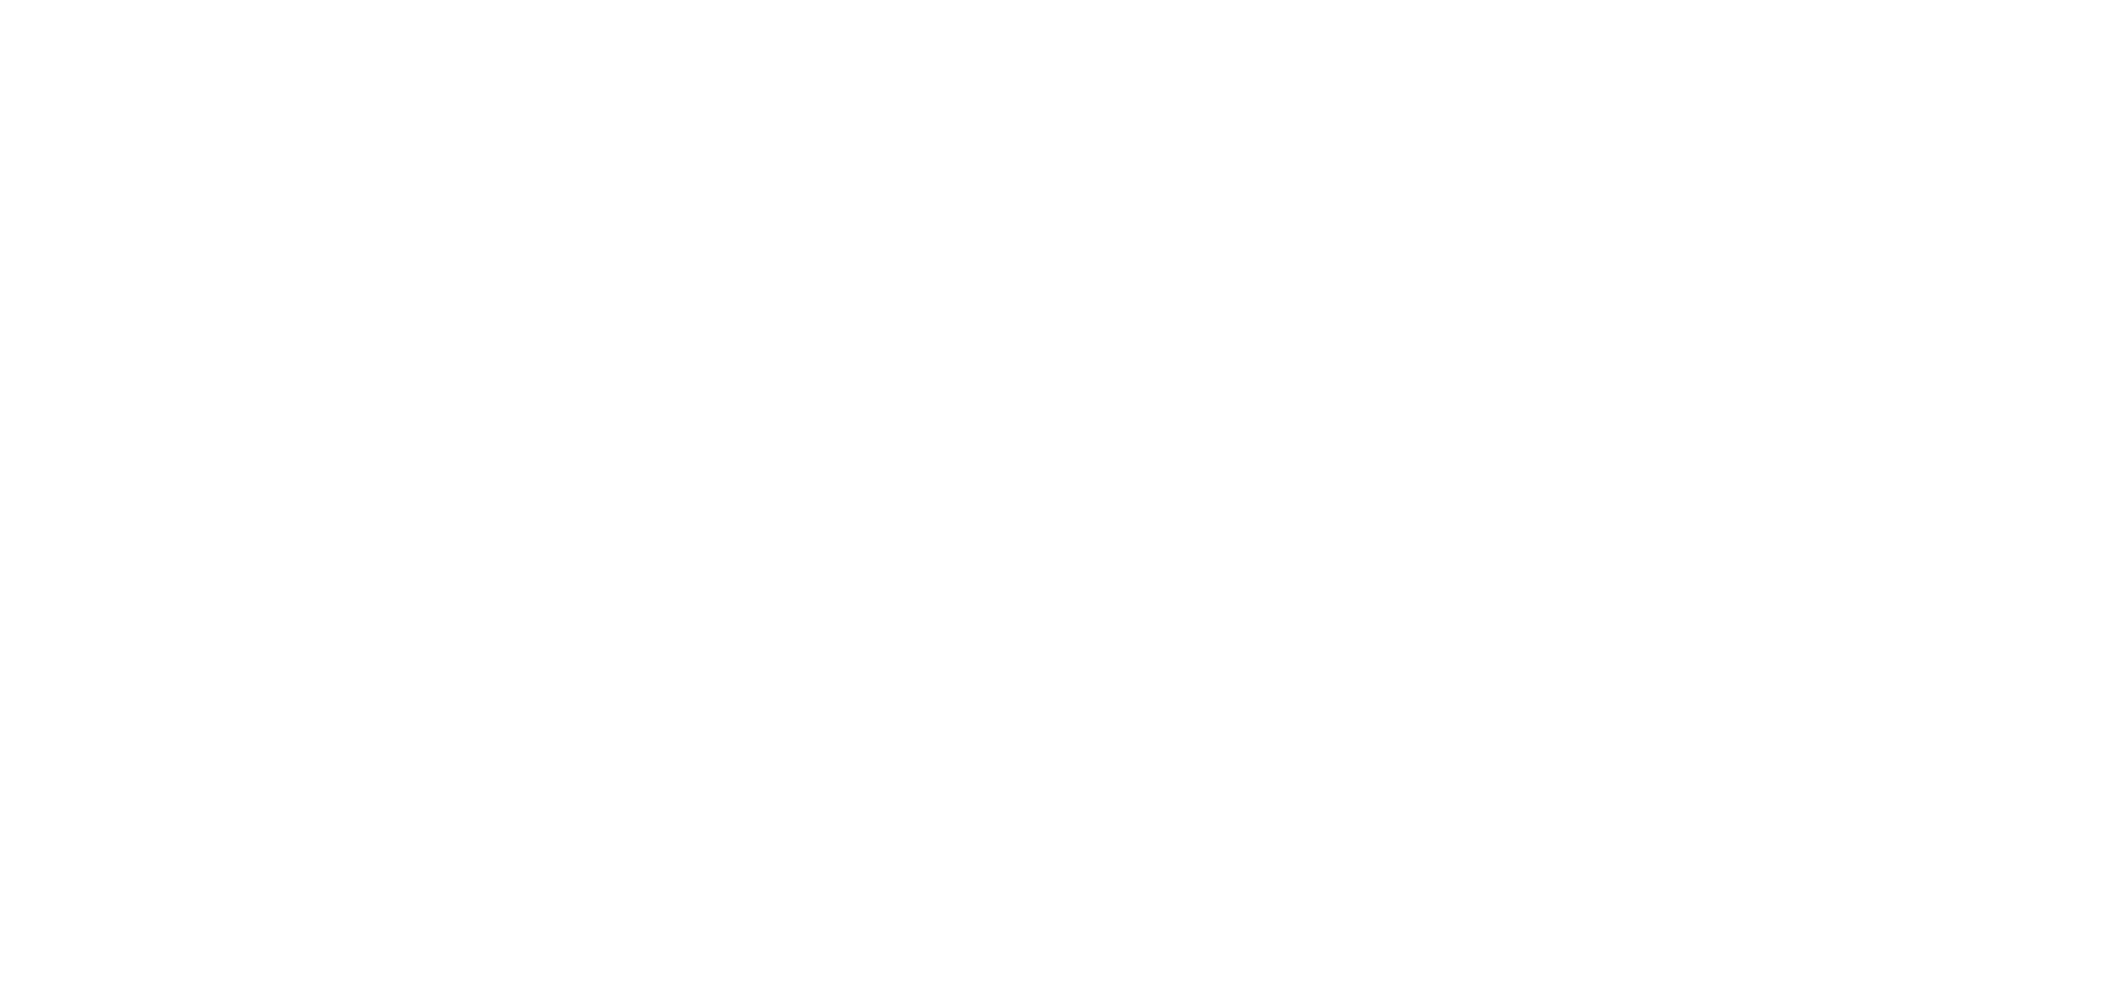 Maverick Leather Company